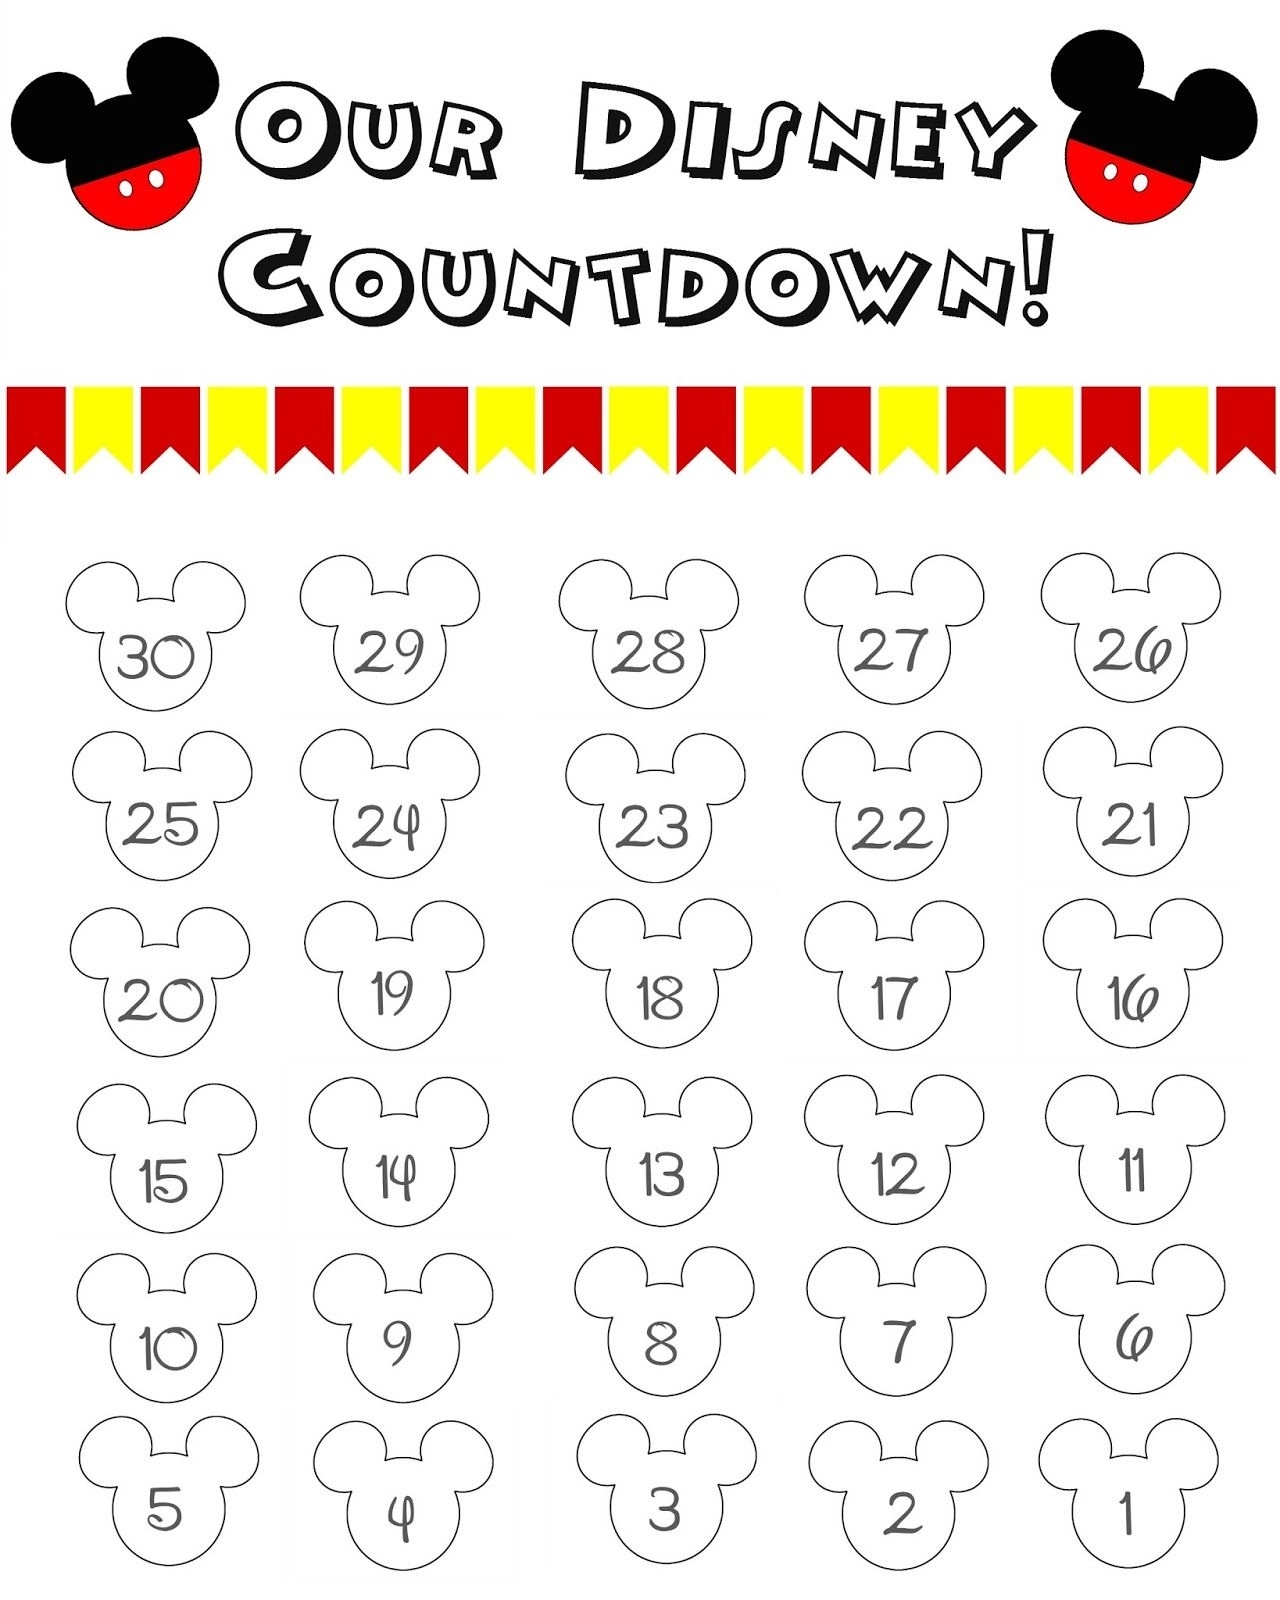 Disney World Countdown Calendar - Free Printable | Disney Free Printable Countdown Calendar Days